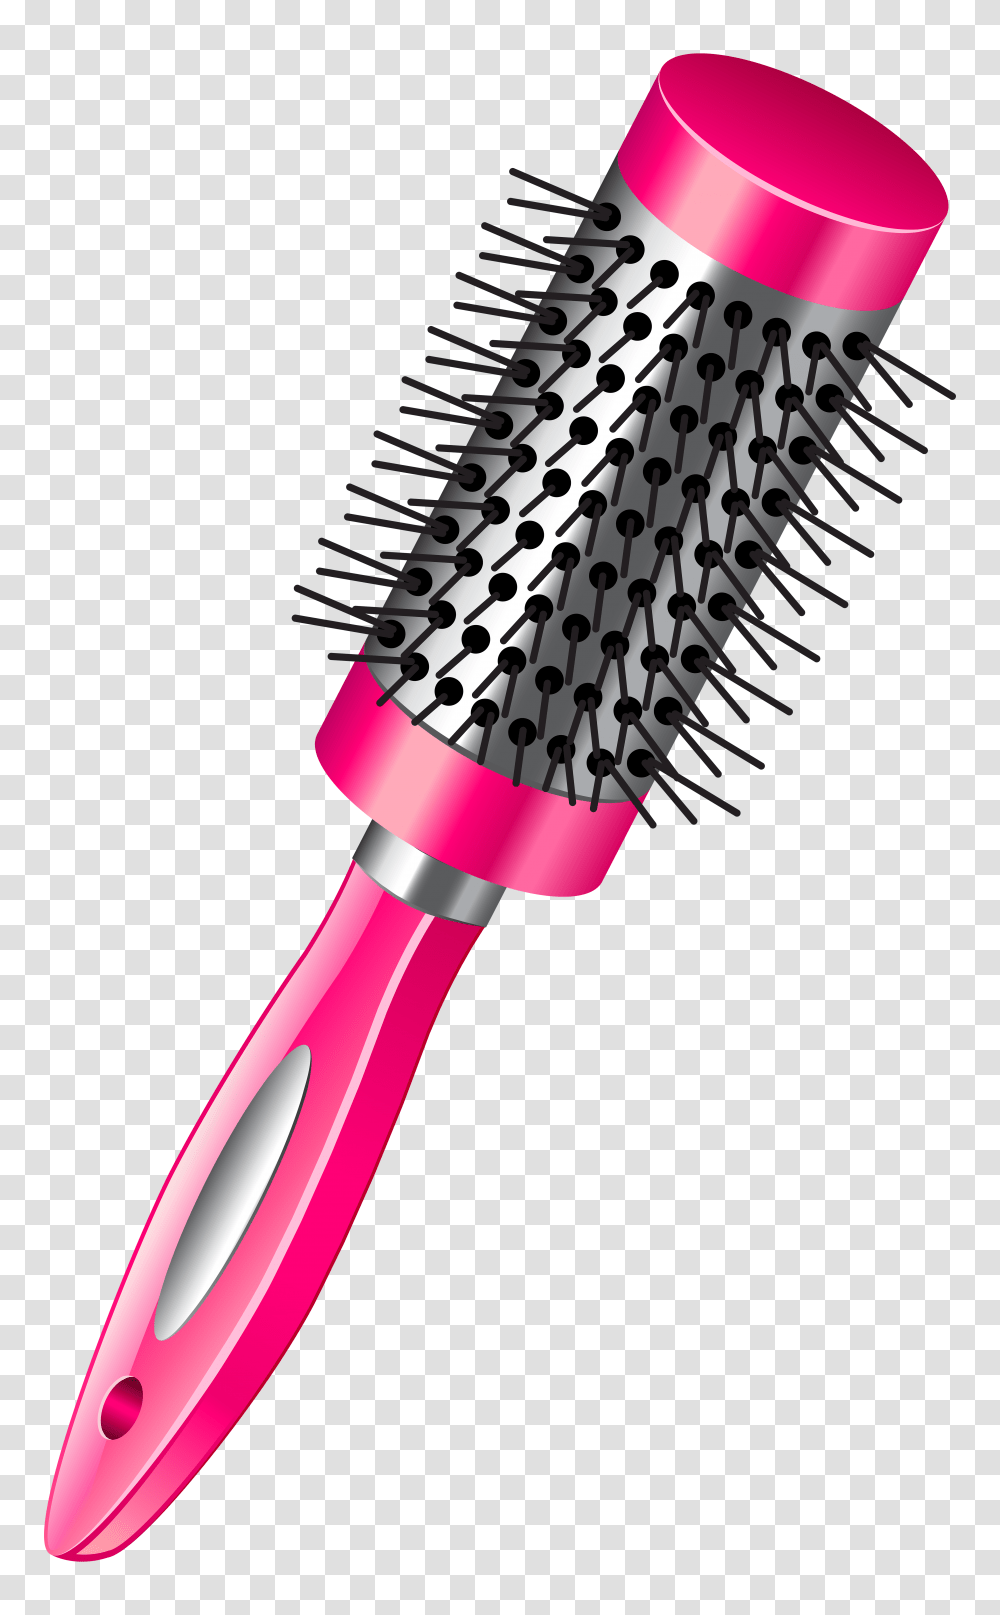 Hairbrush Clip Art, Tool, Cosmetics, Lipstick Transparent Png